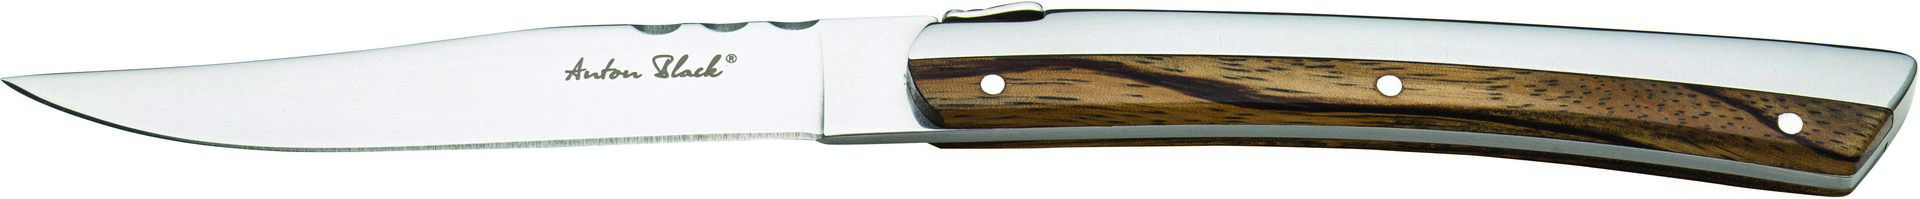 Laguiole Half Wood Handled Steak Knife - F91192-000000-B01012 (Pack of 12)